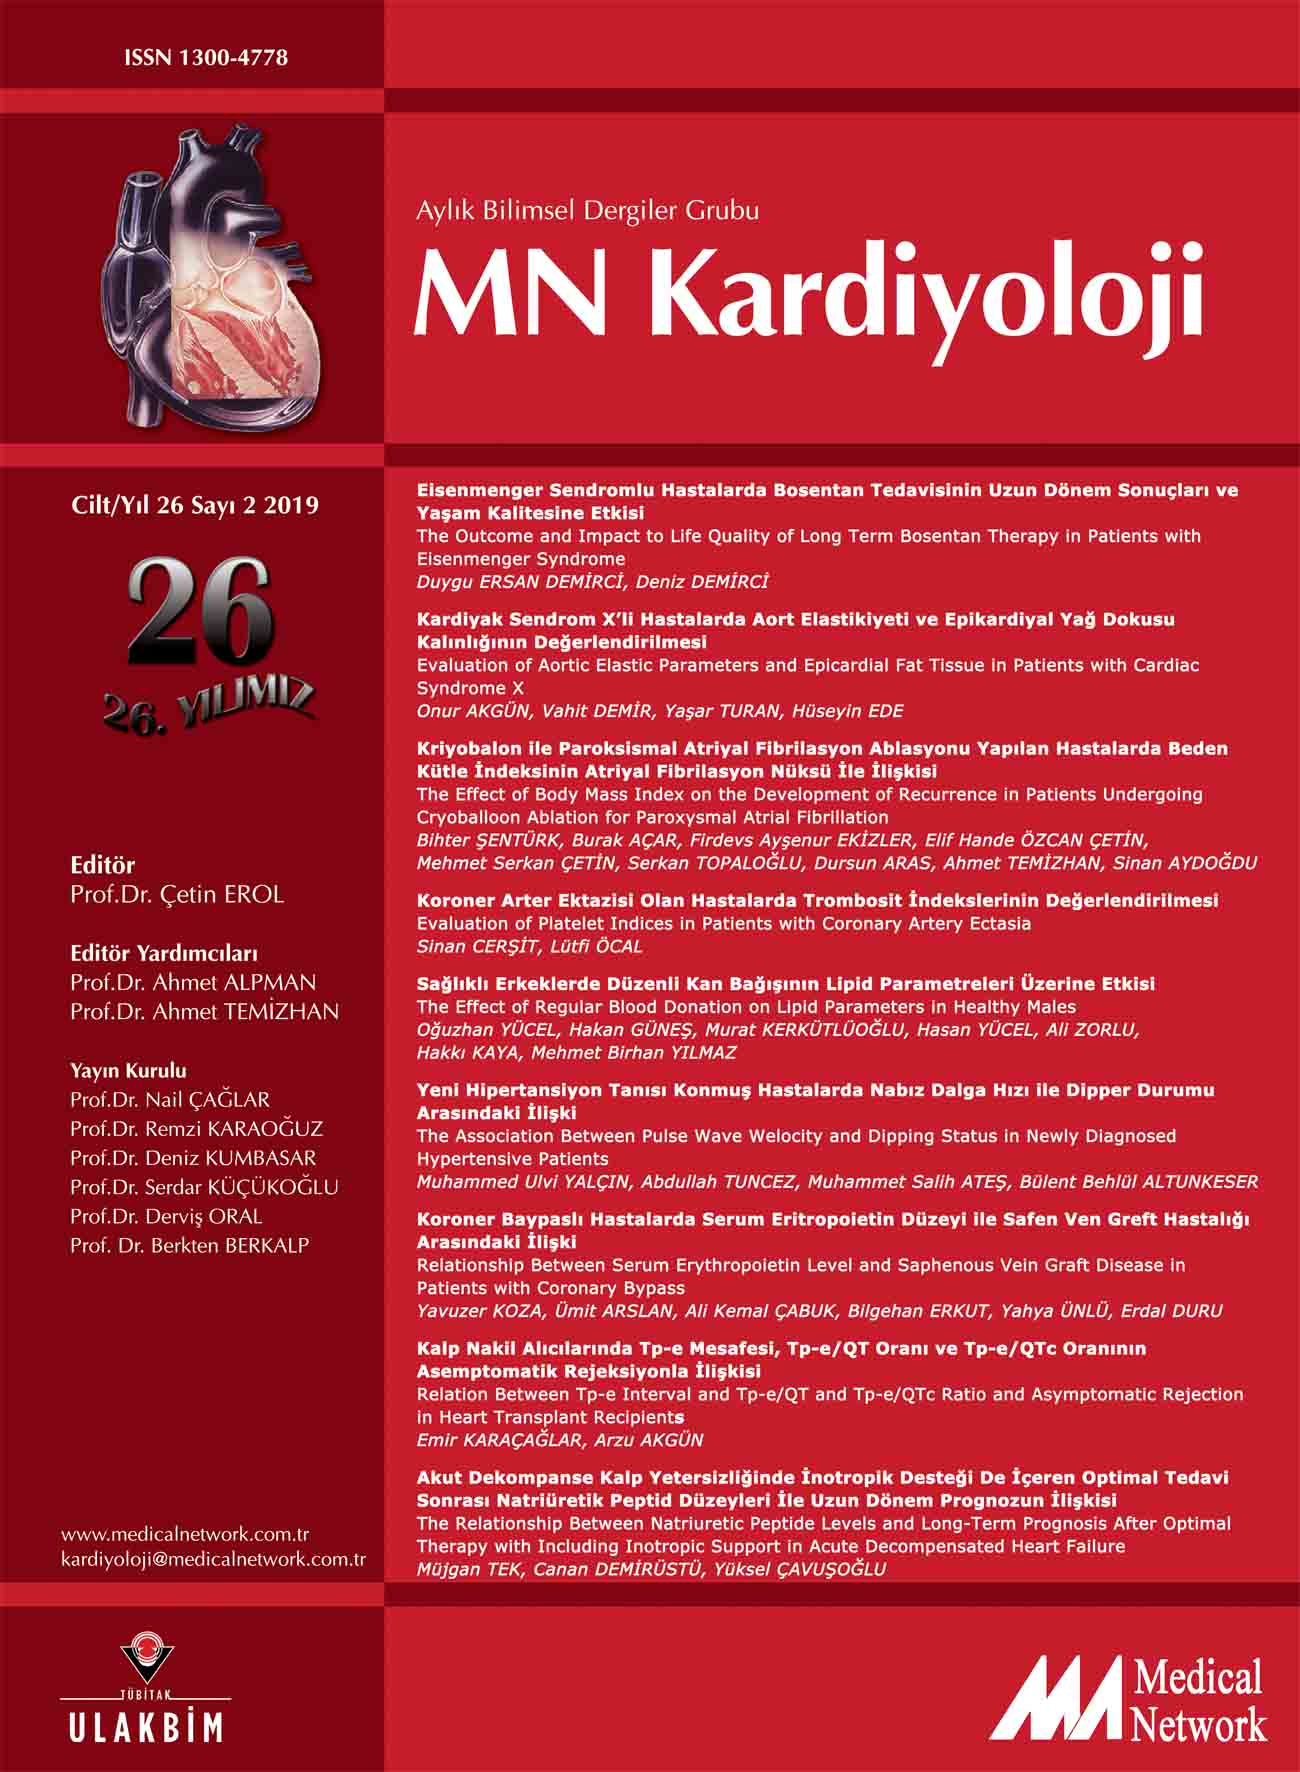 <p>MN Kardiyoloji Cilt: 26 Say: 2 2019 MN Cardiology Volume: 26 No: 2 2019</p>